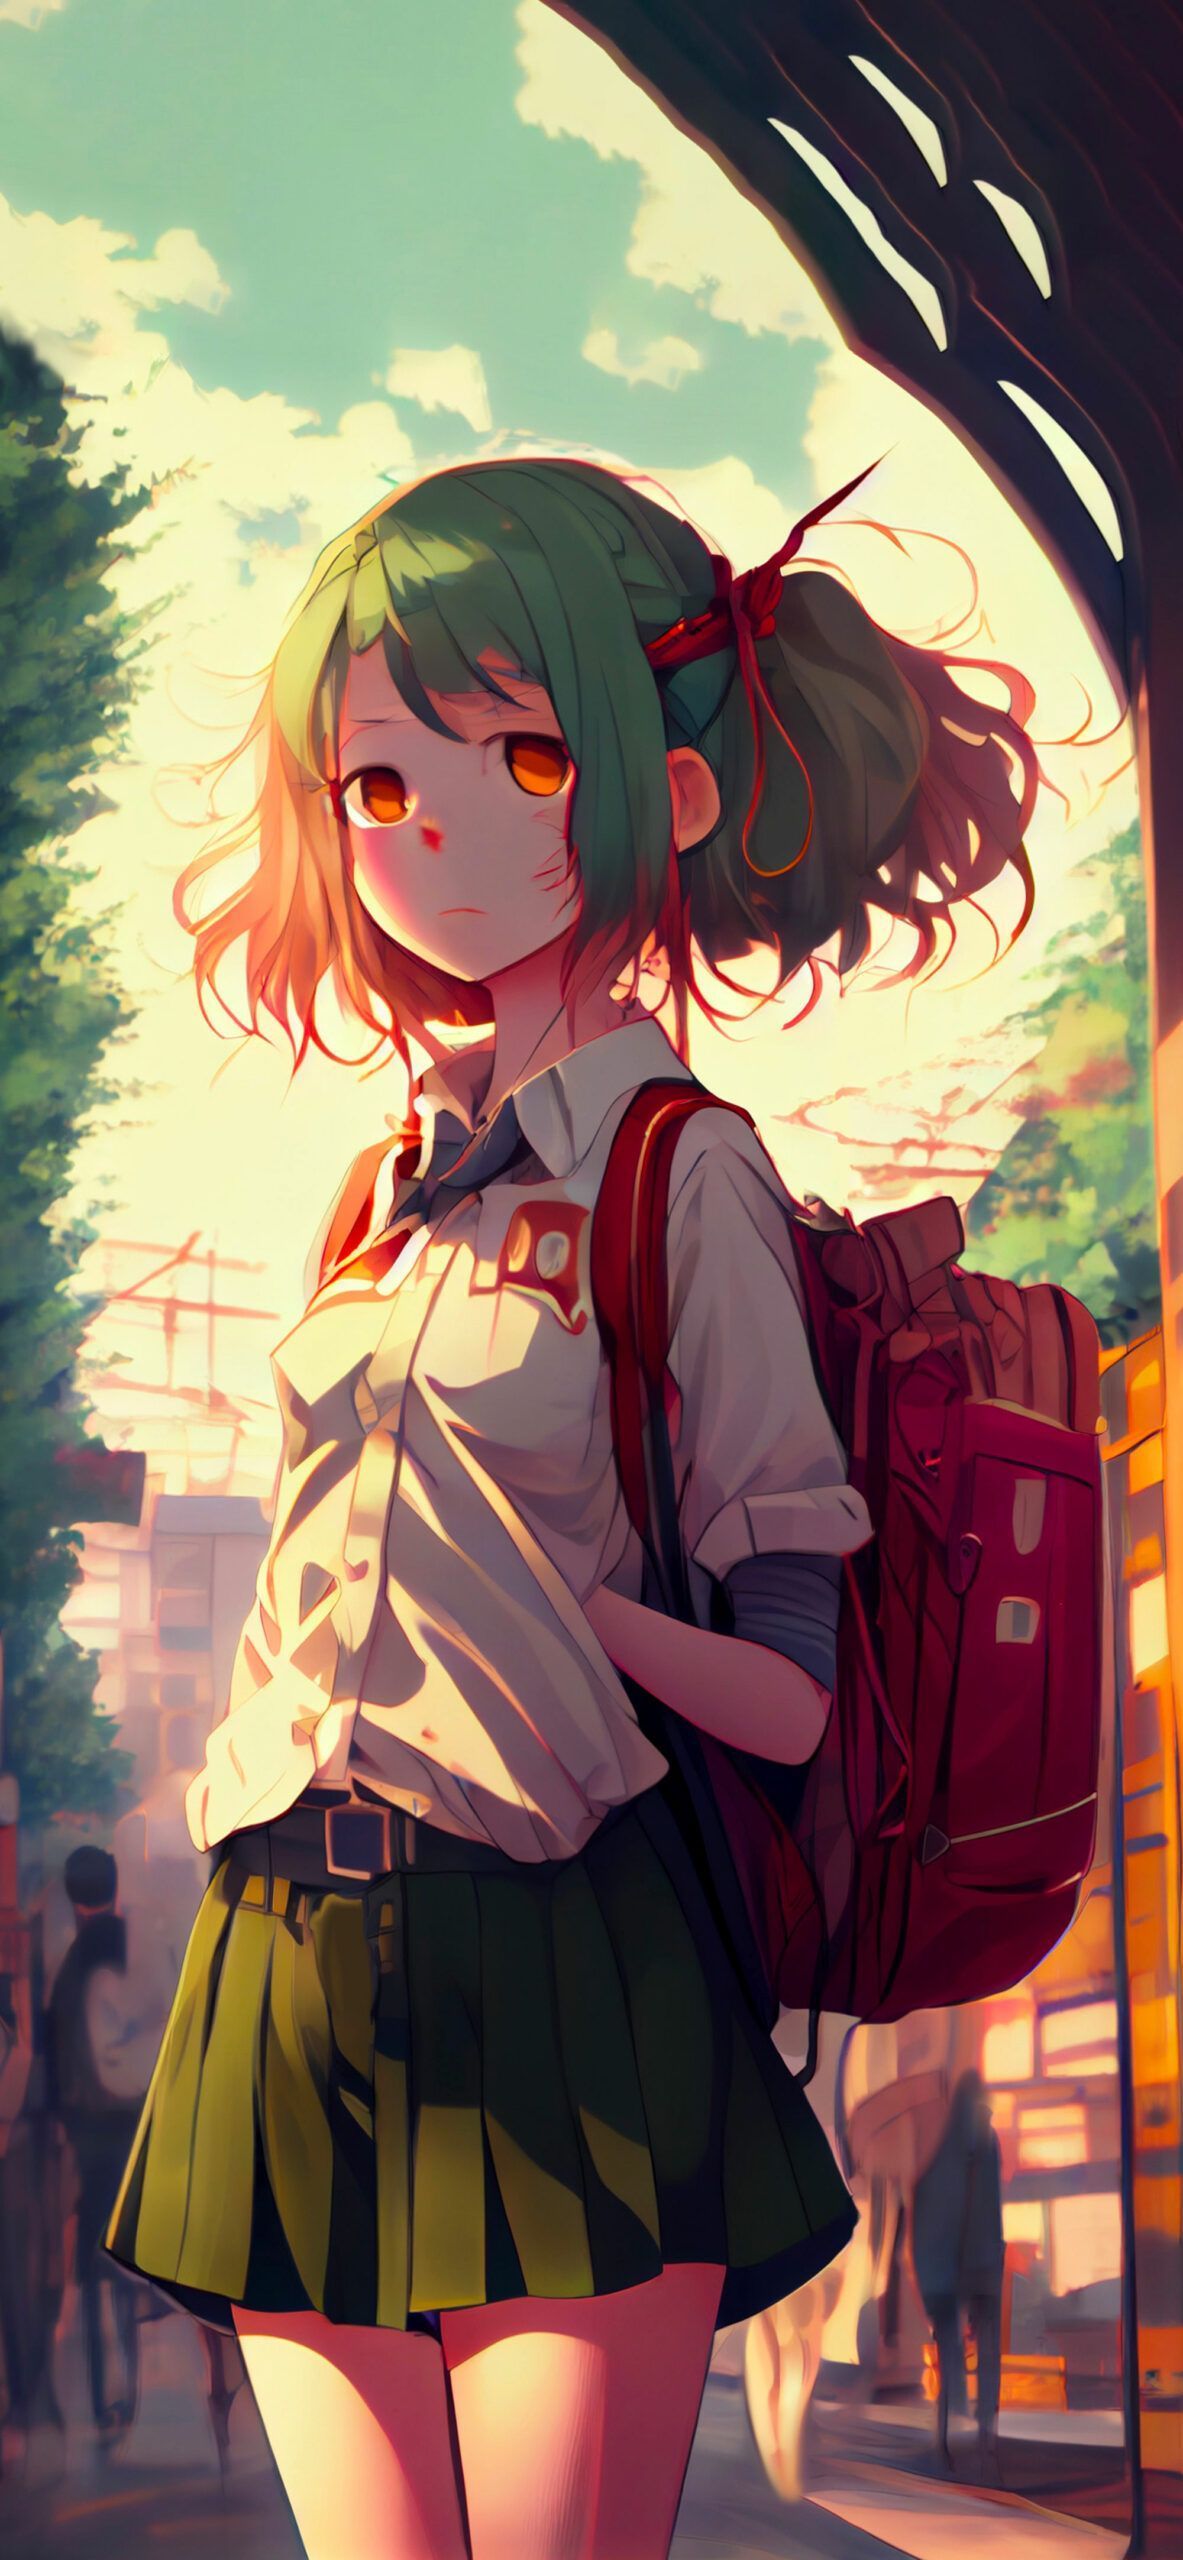 Anime girl with green hair standing on the street - Anime girl, school, anime